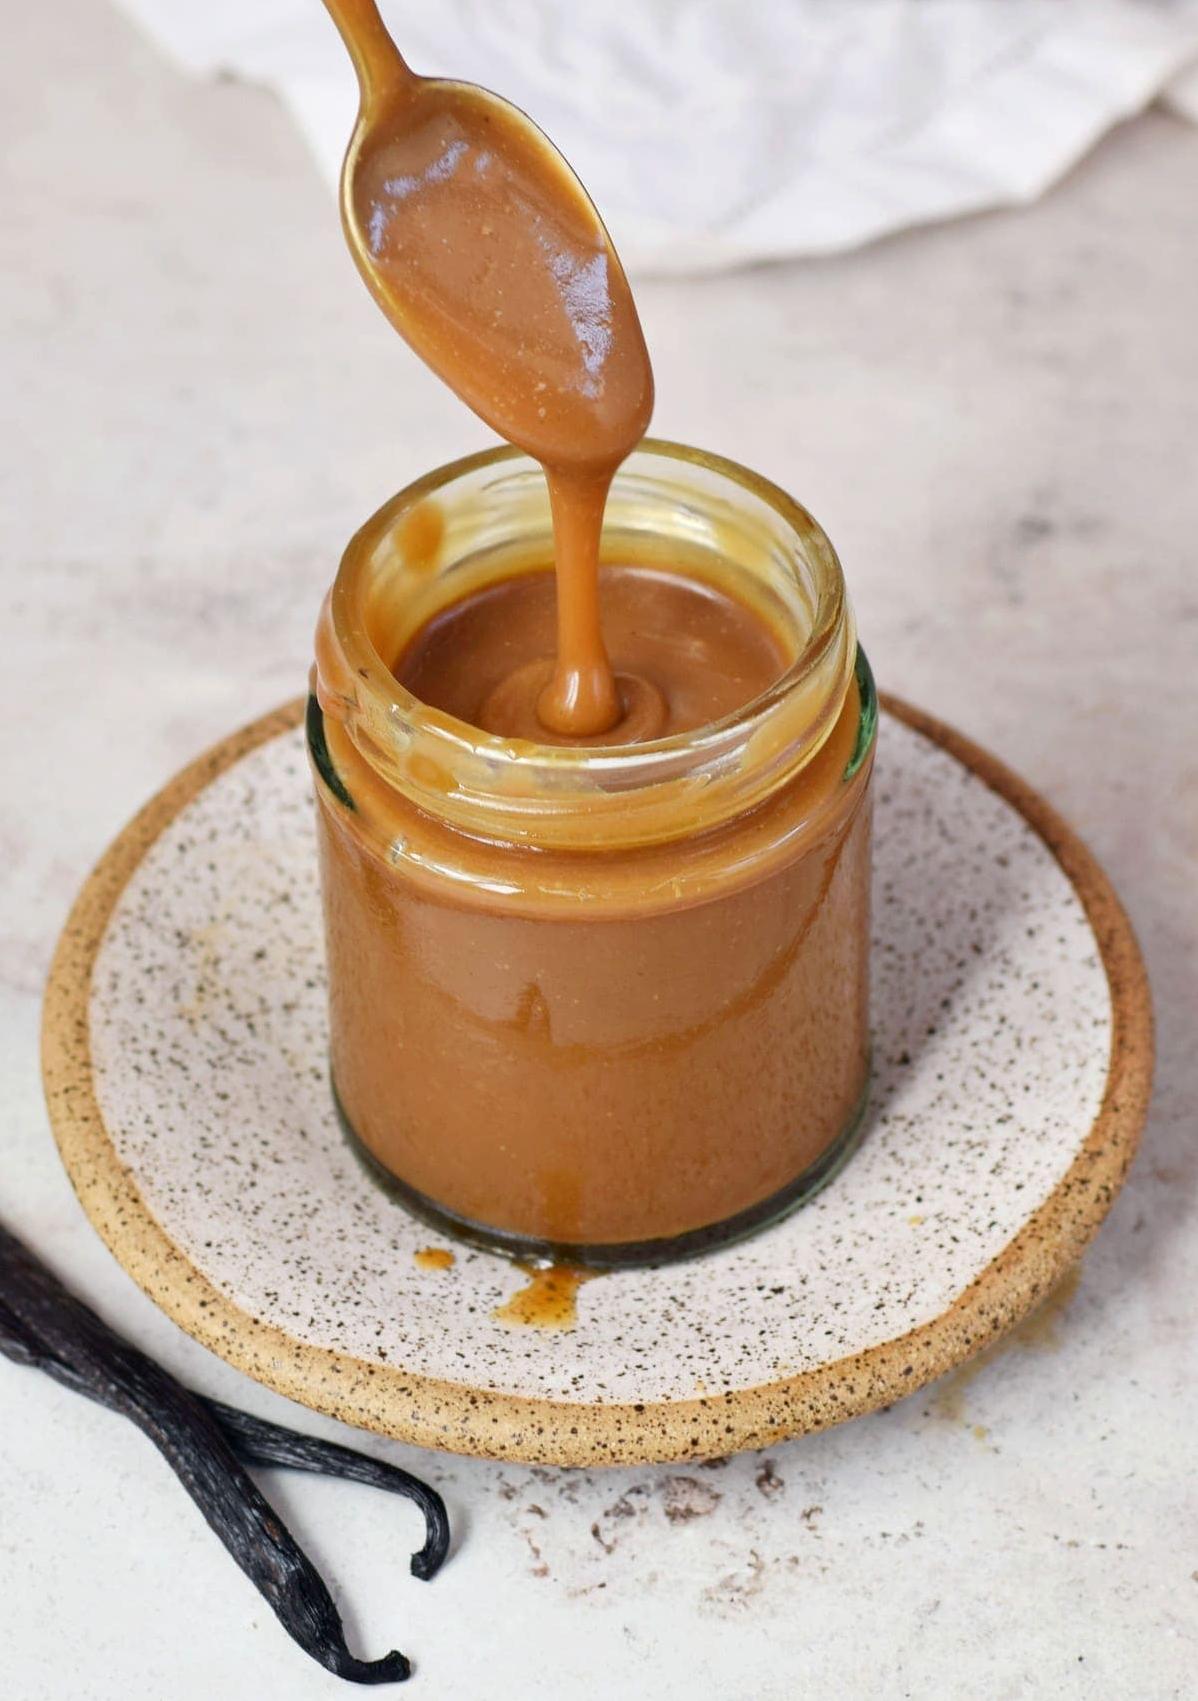  Top your vegan ice cream sundae with this caramel sauce